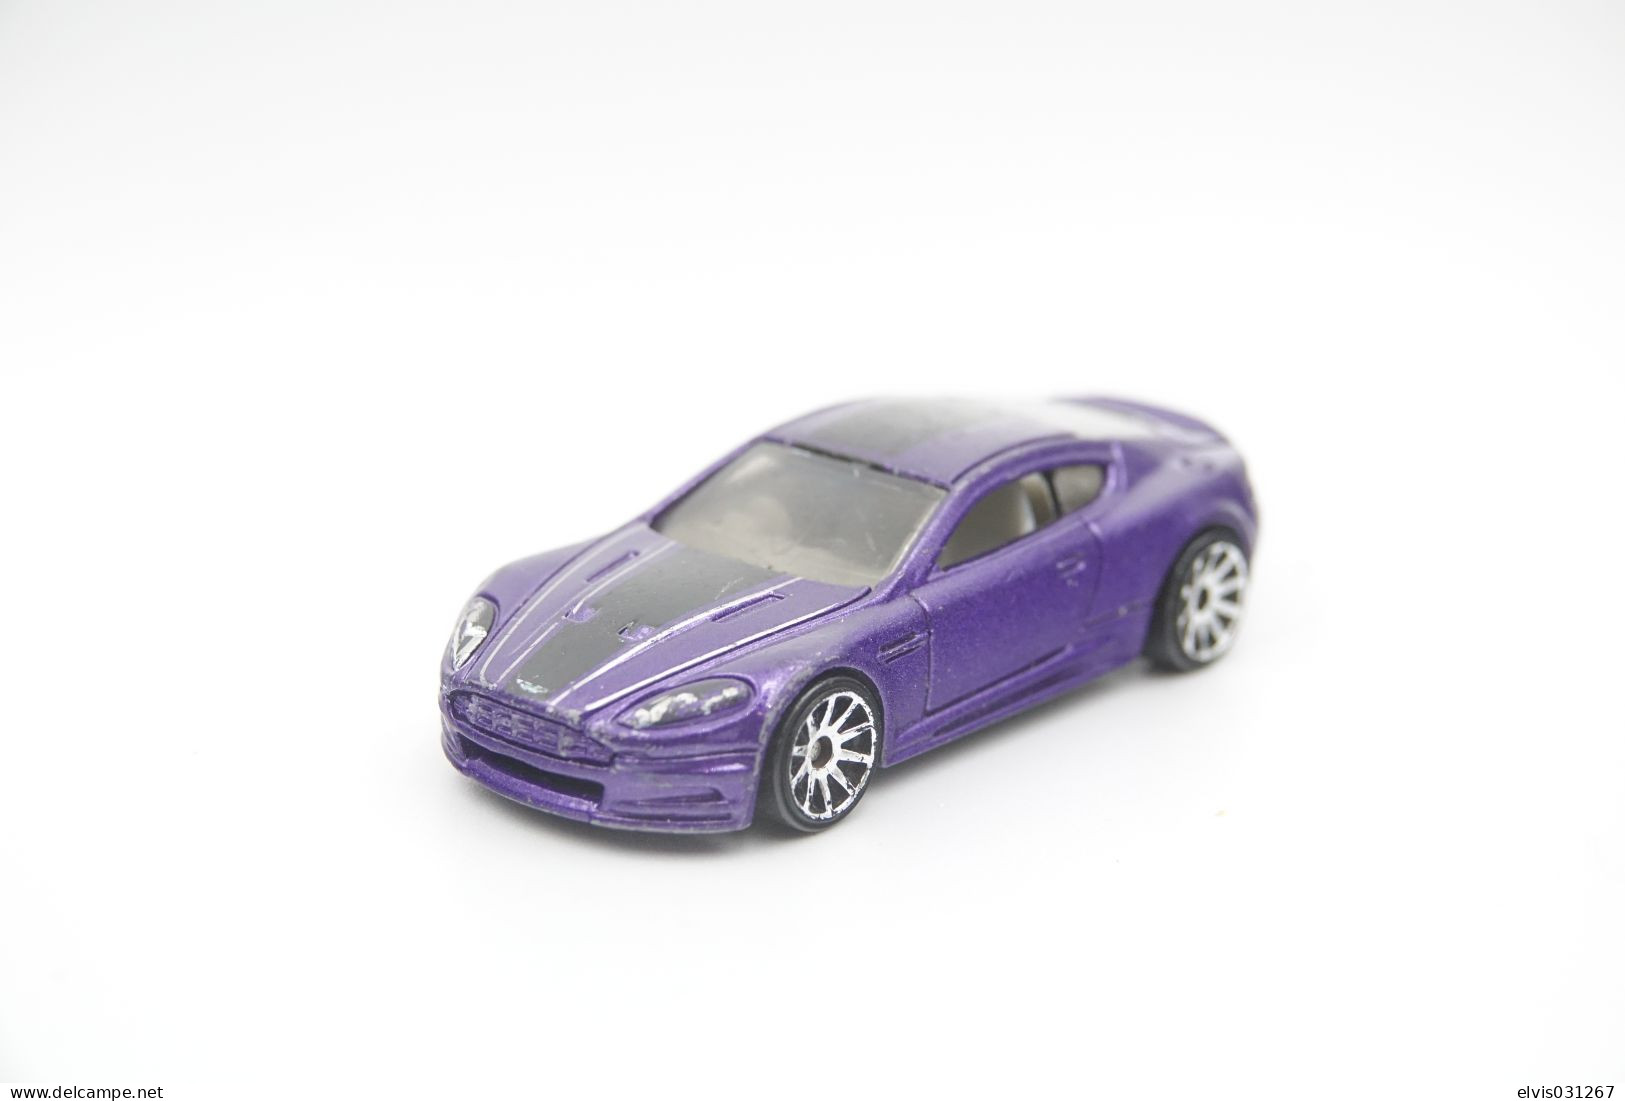 Hot Wheels Mattel 2010 Aston Martin DBS Issued 2017, Scale 1/64 - Matchbox (Lesney)